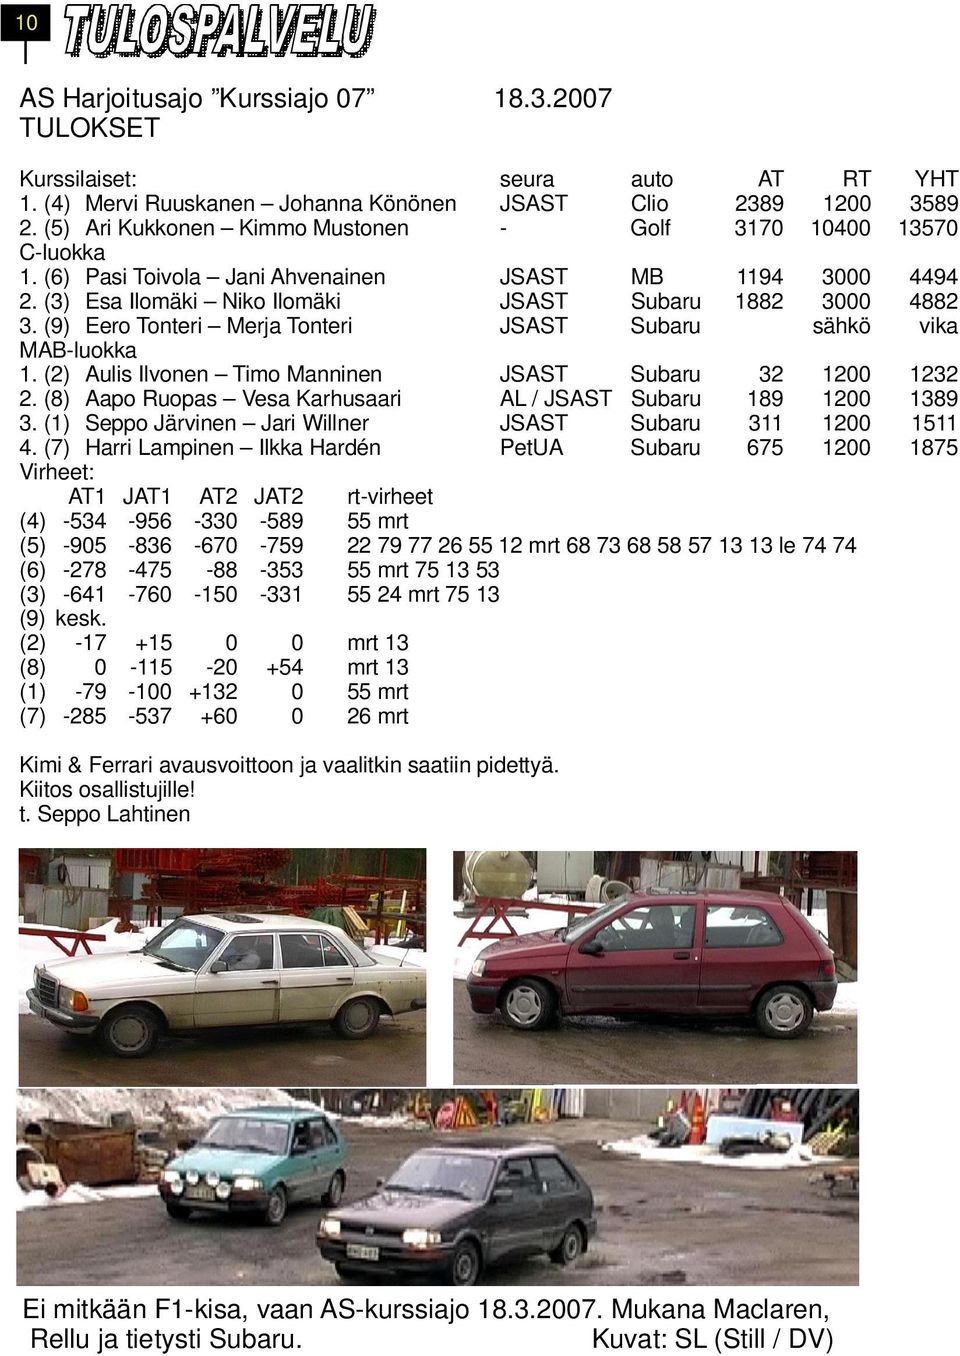 (9) Eero Tonteri Merja Tonteri JSAST Subaru sähkö vika MAB-luokka 1. (2) Aulis Ilvonen Timo Manninen JSAST Subaru 32 1200 1232 2. (8) Aapo Ruopas Vesa Karhusaari AL / JSAST Subaru 189 1200 1389 3.